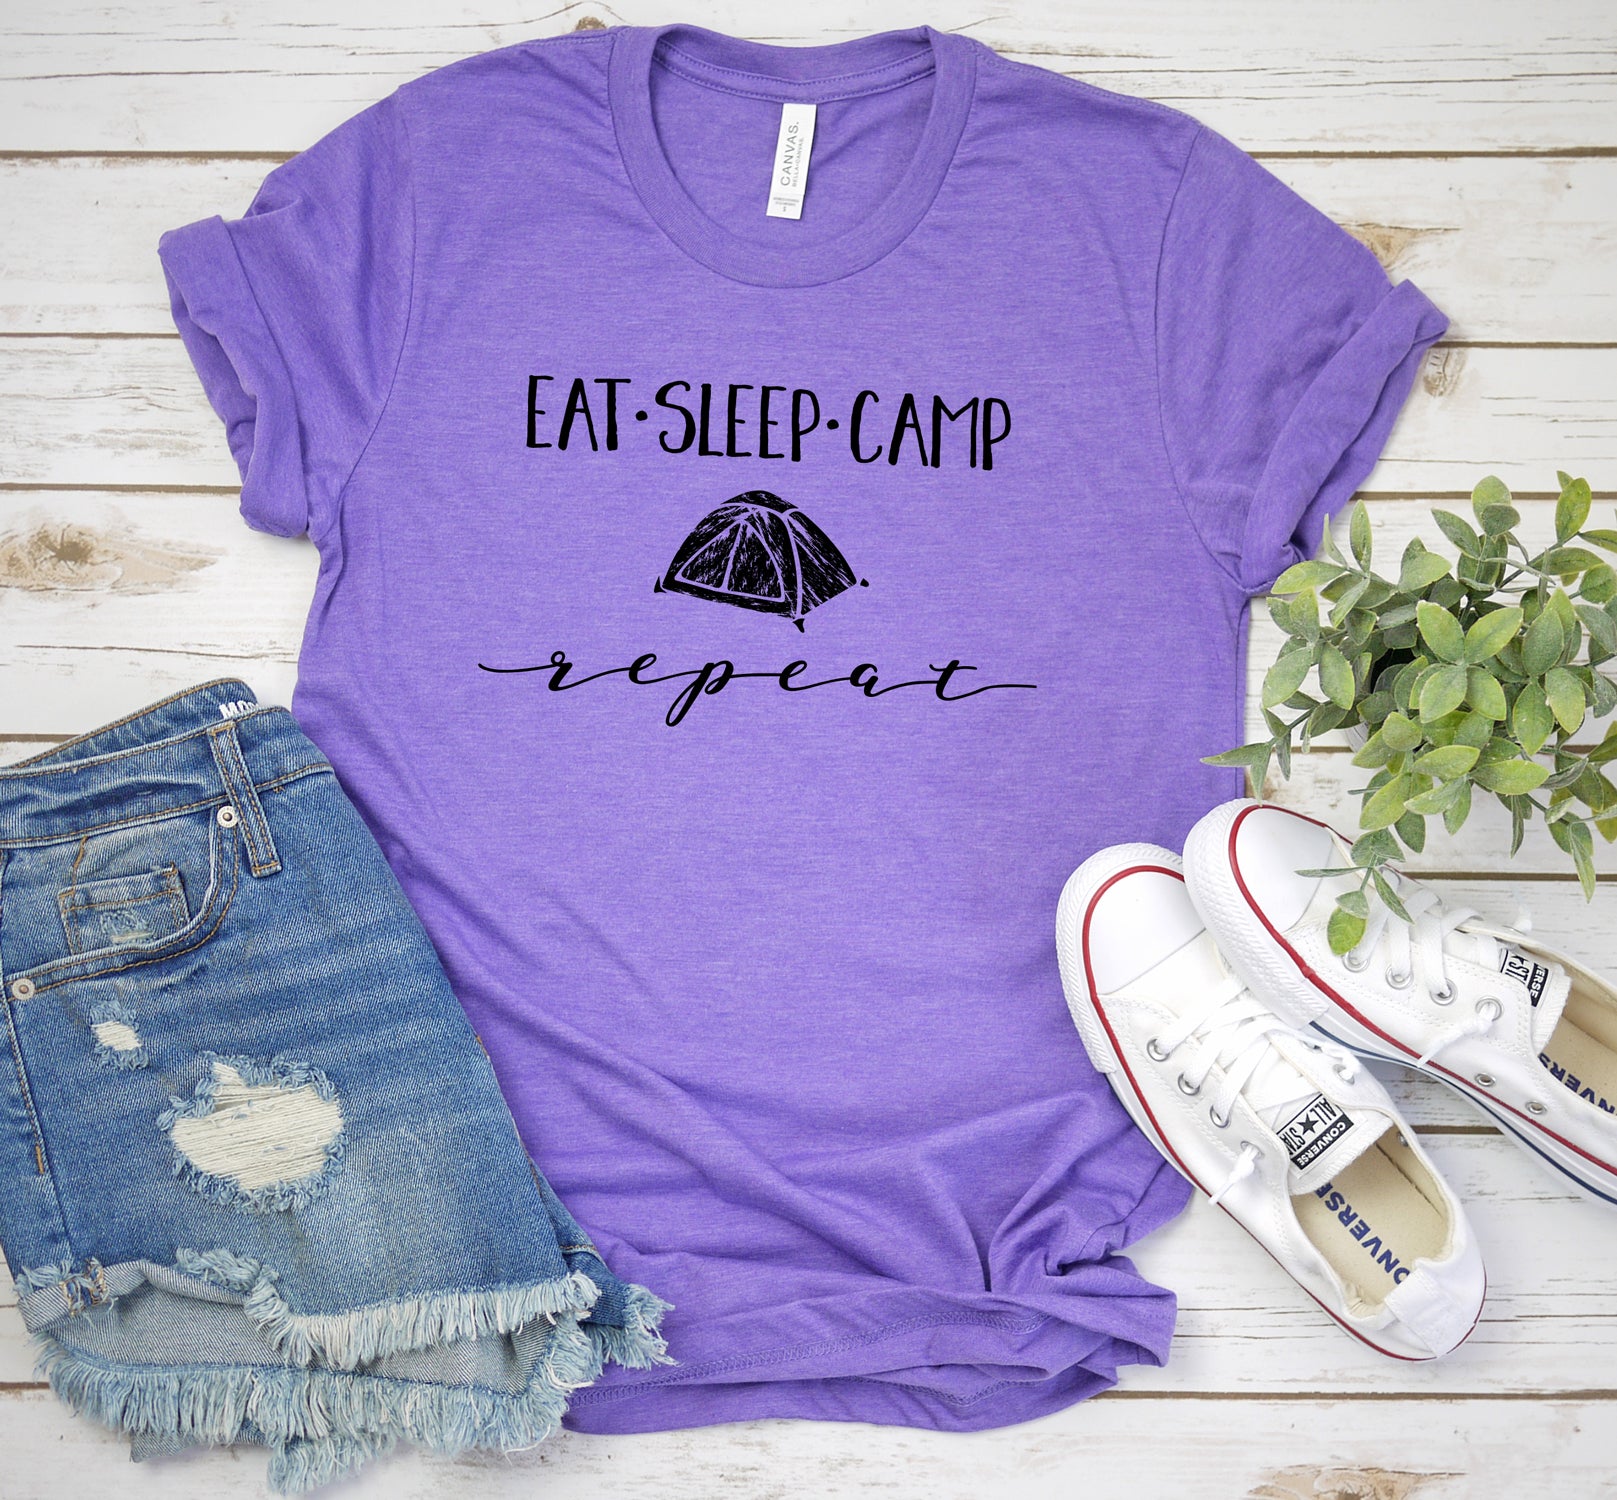 Eat Sleep Camp Repeat